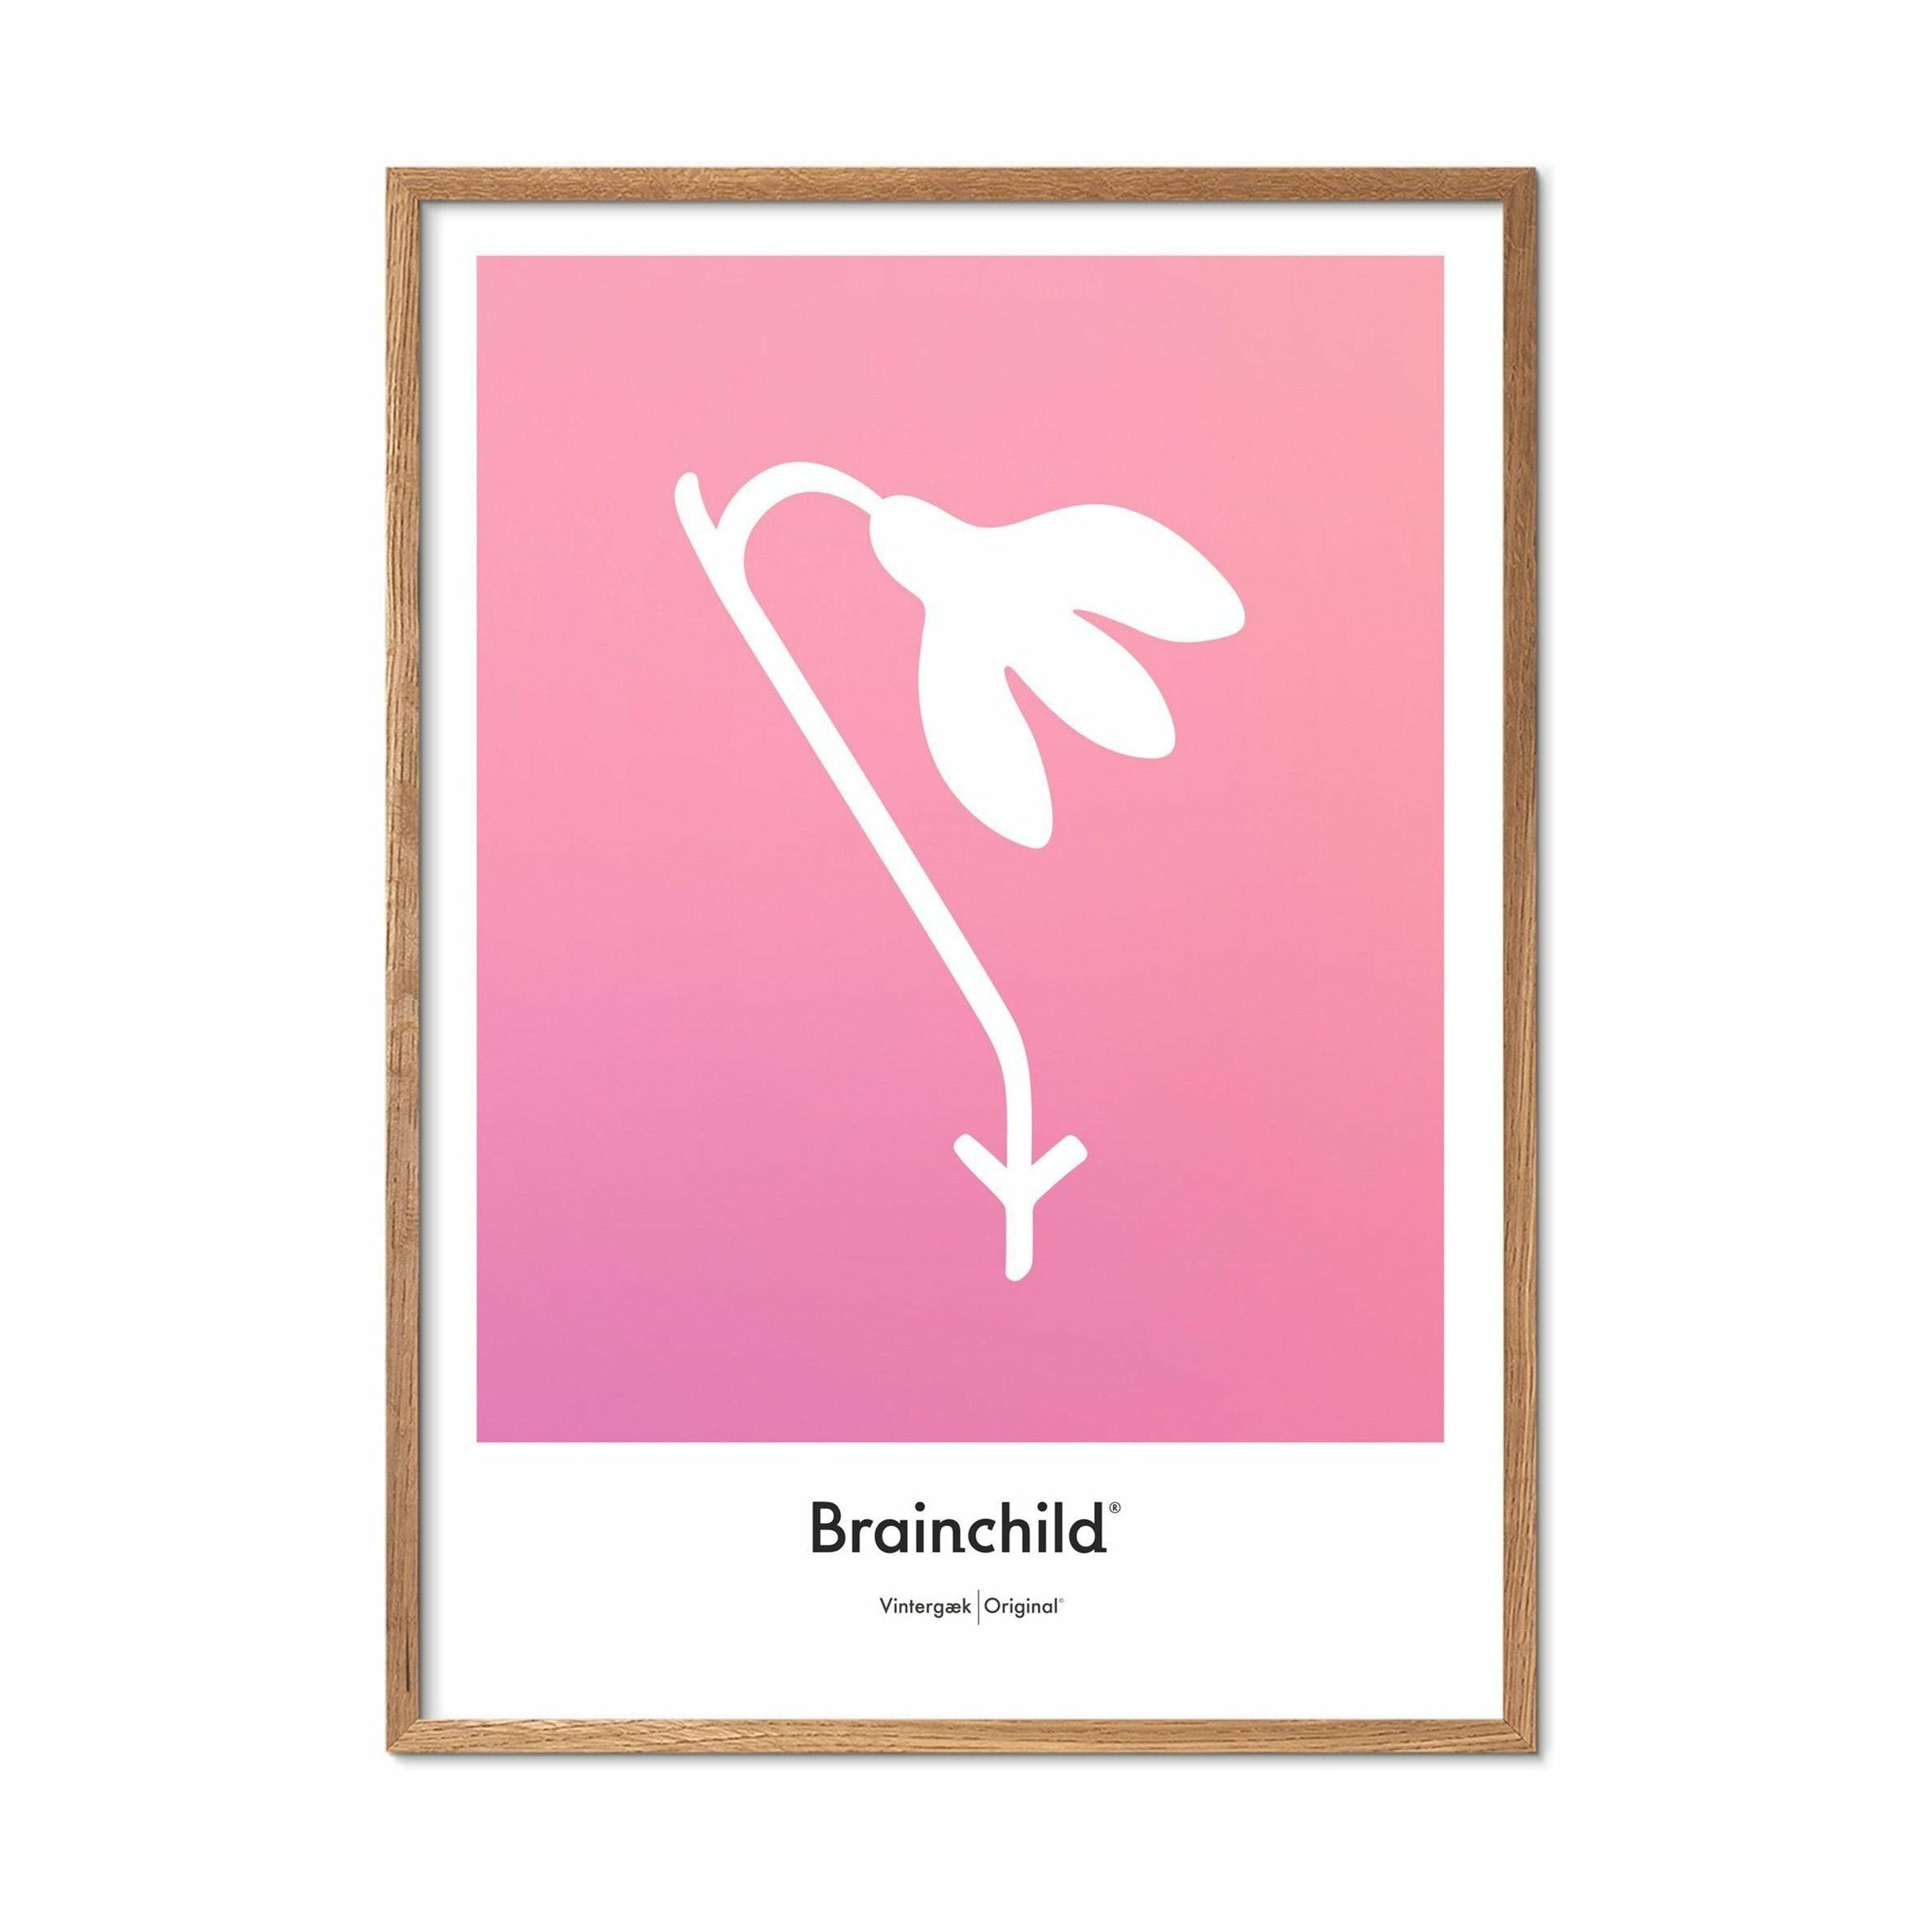 Brainchild Snowdrop Design Icon Poster, Frame Made Of Light Wood 70x100 Cm, Pink